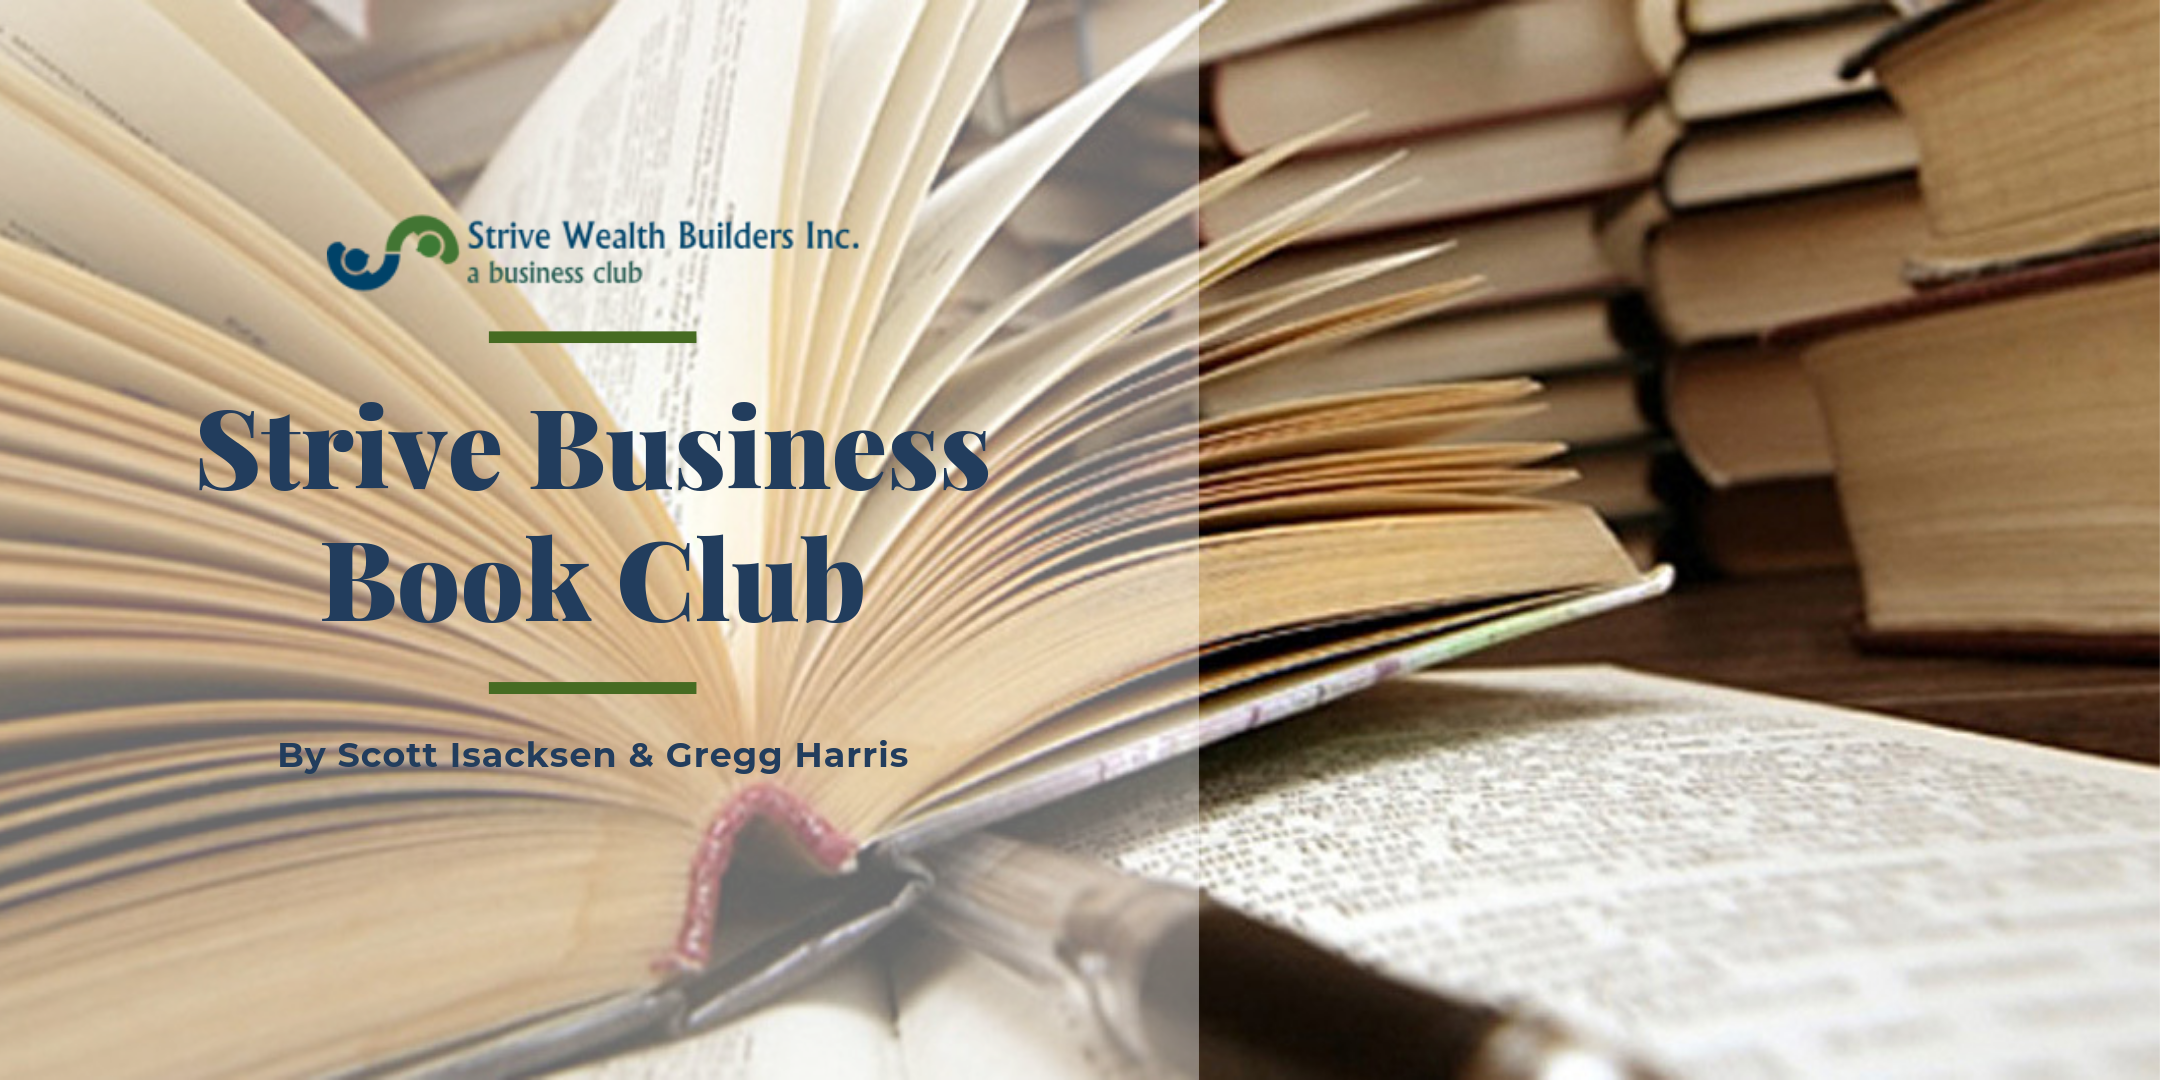 Strive Business Book Club (BBC)